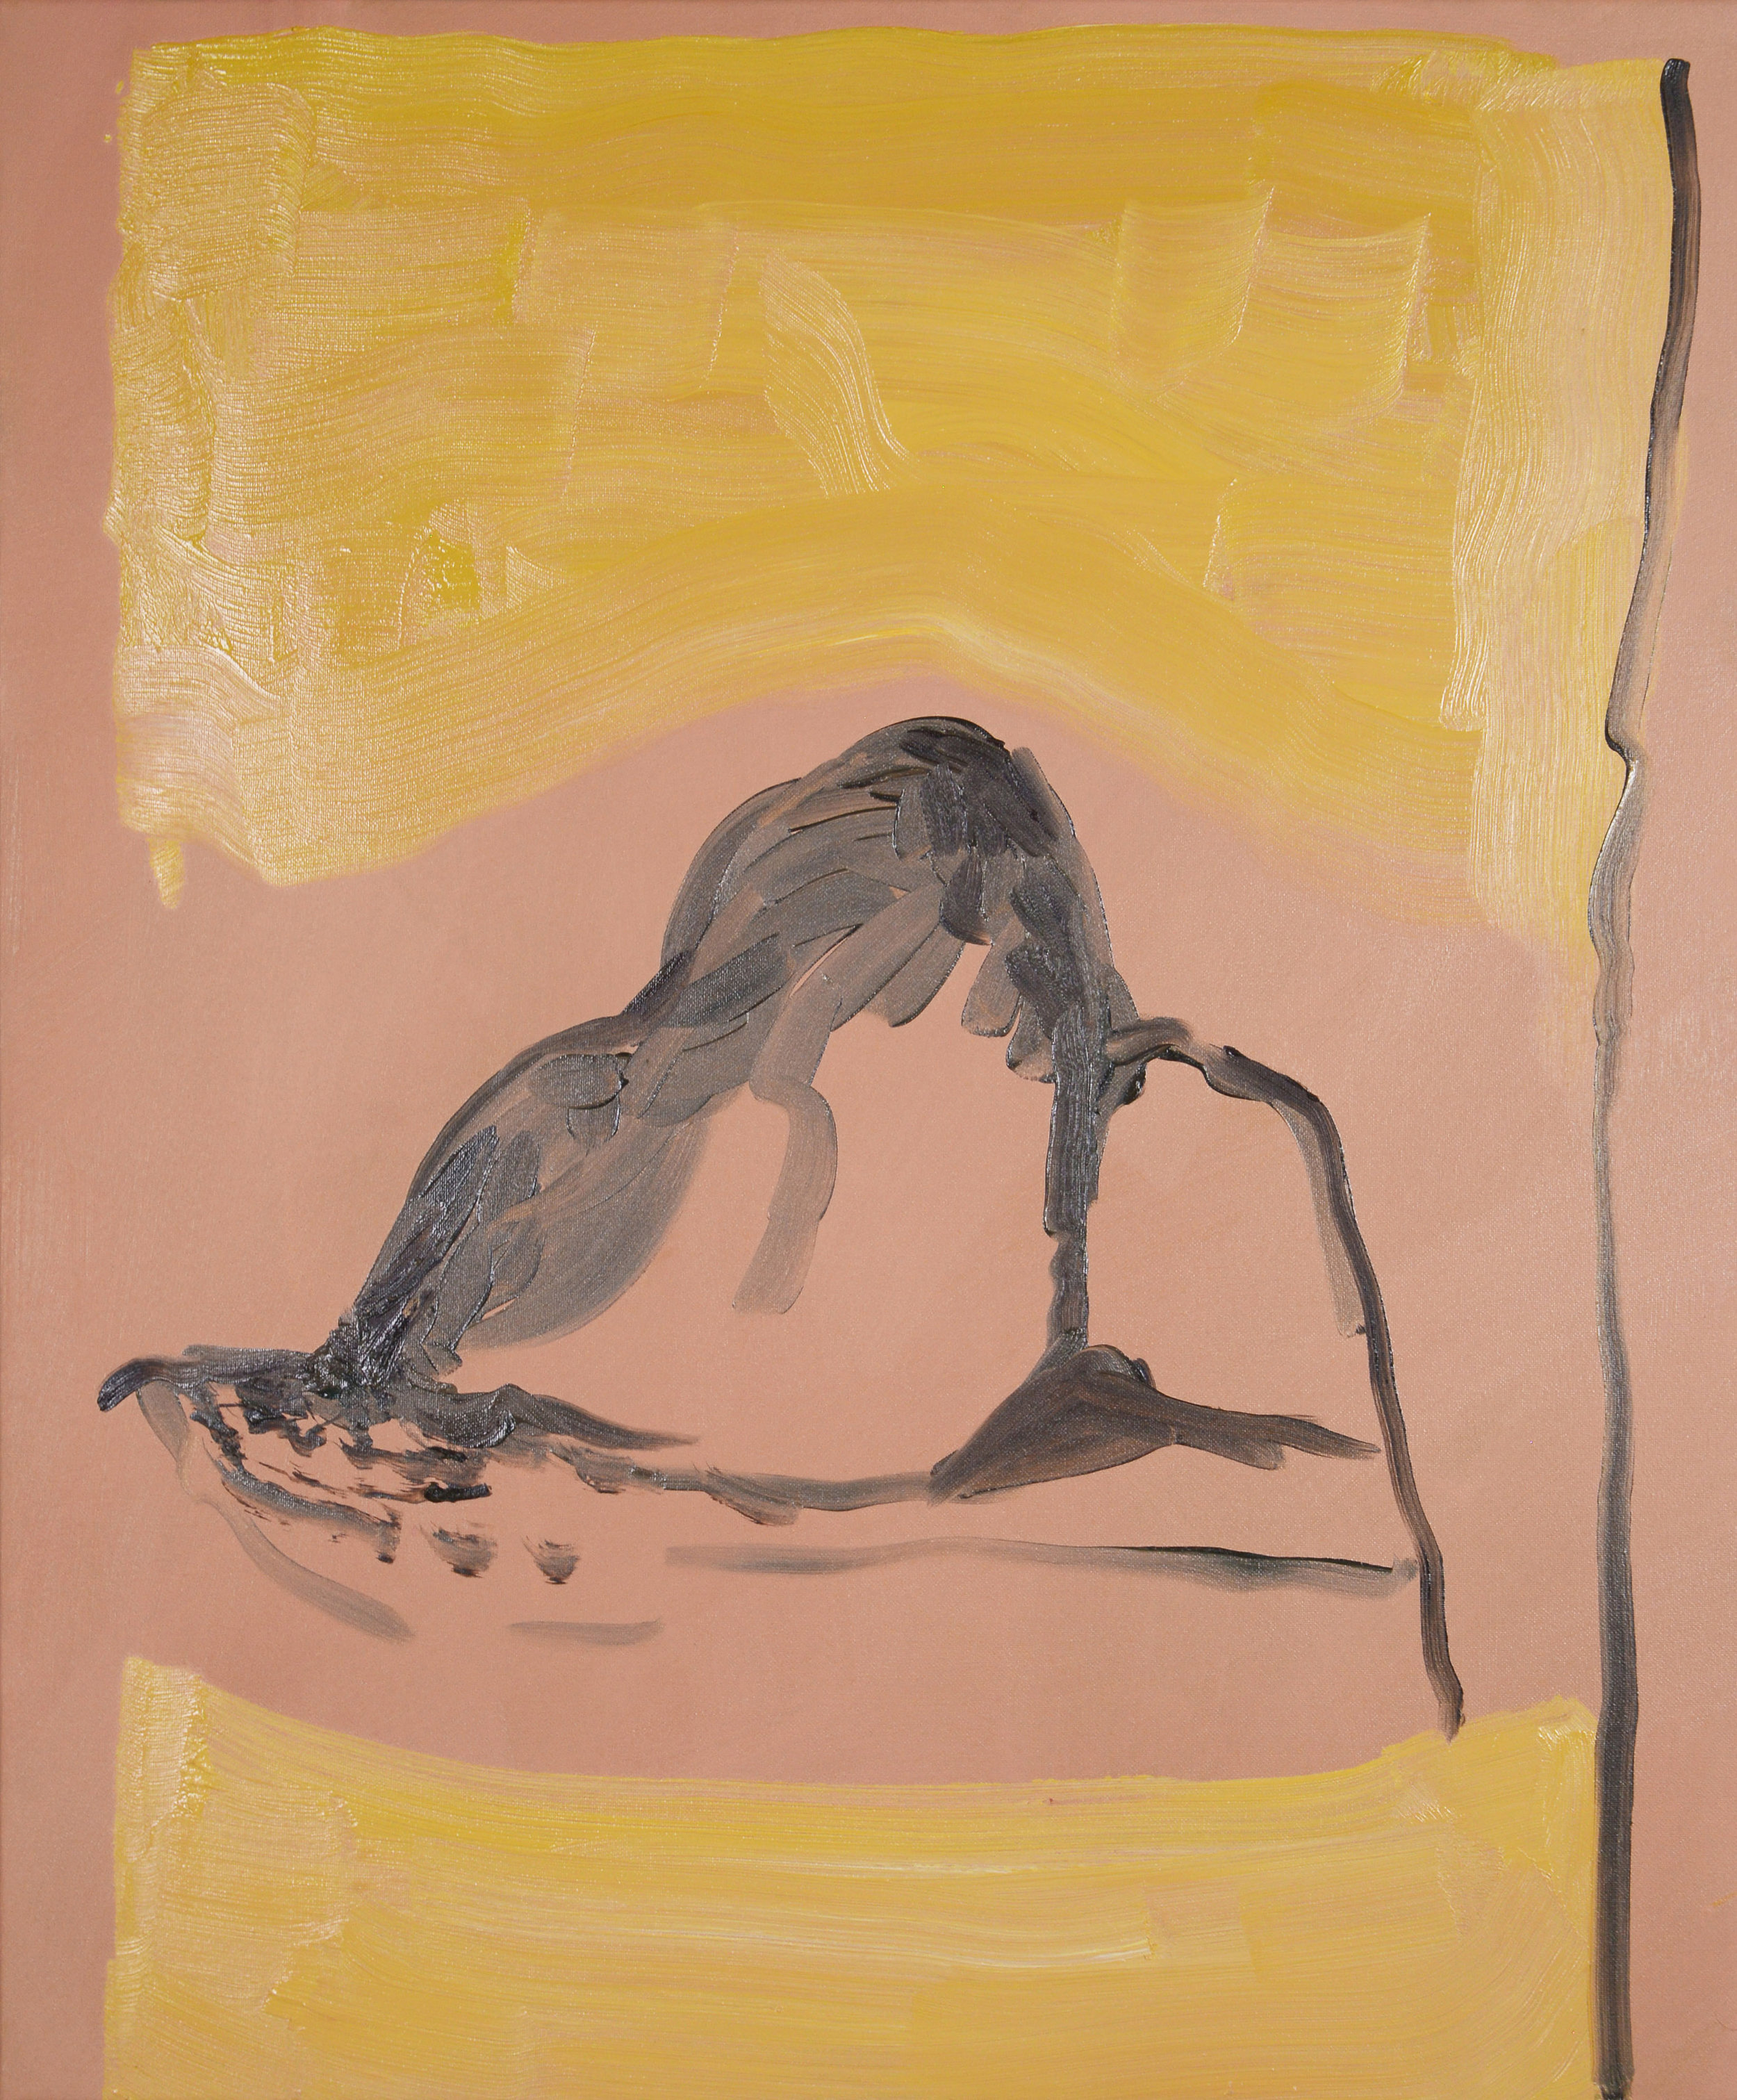 Bather, 2013, Oil on canvas, 60 x 50 cm